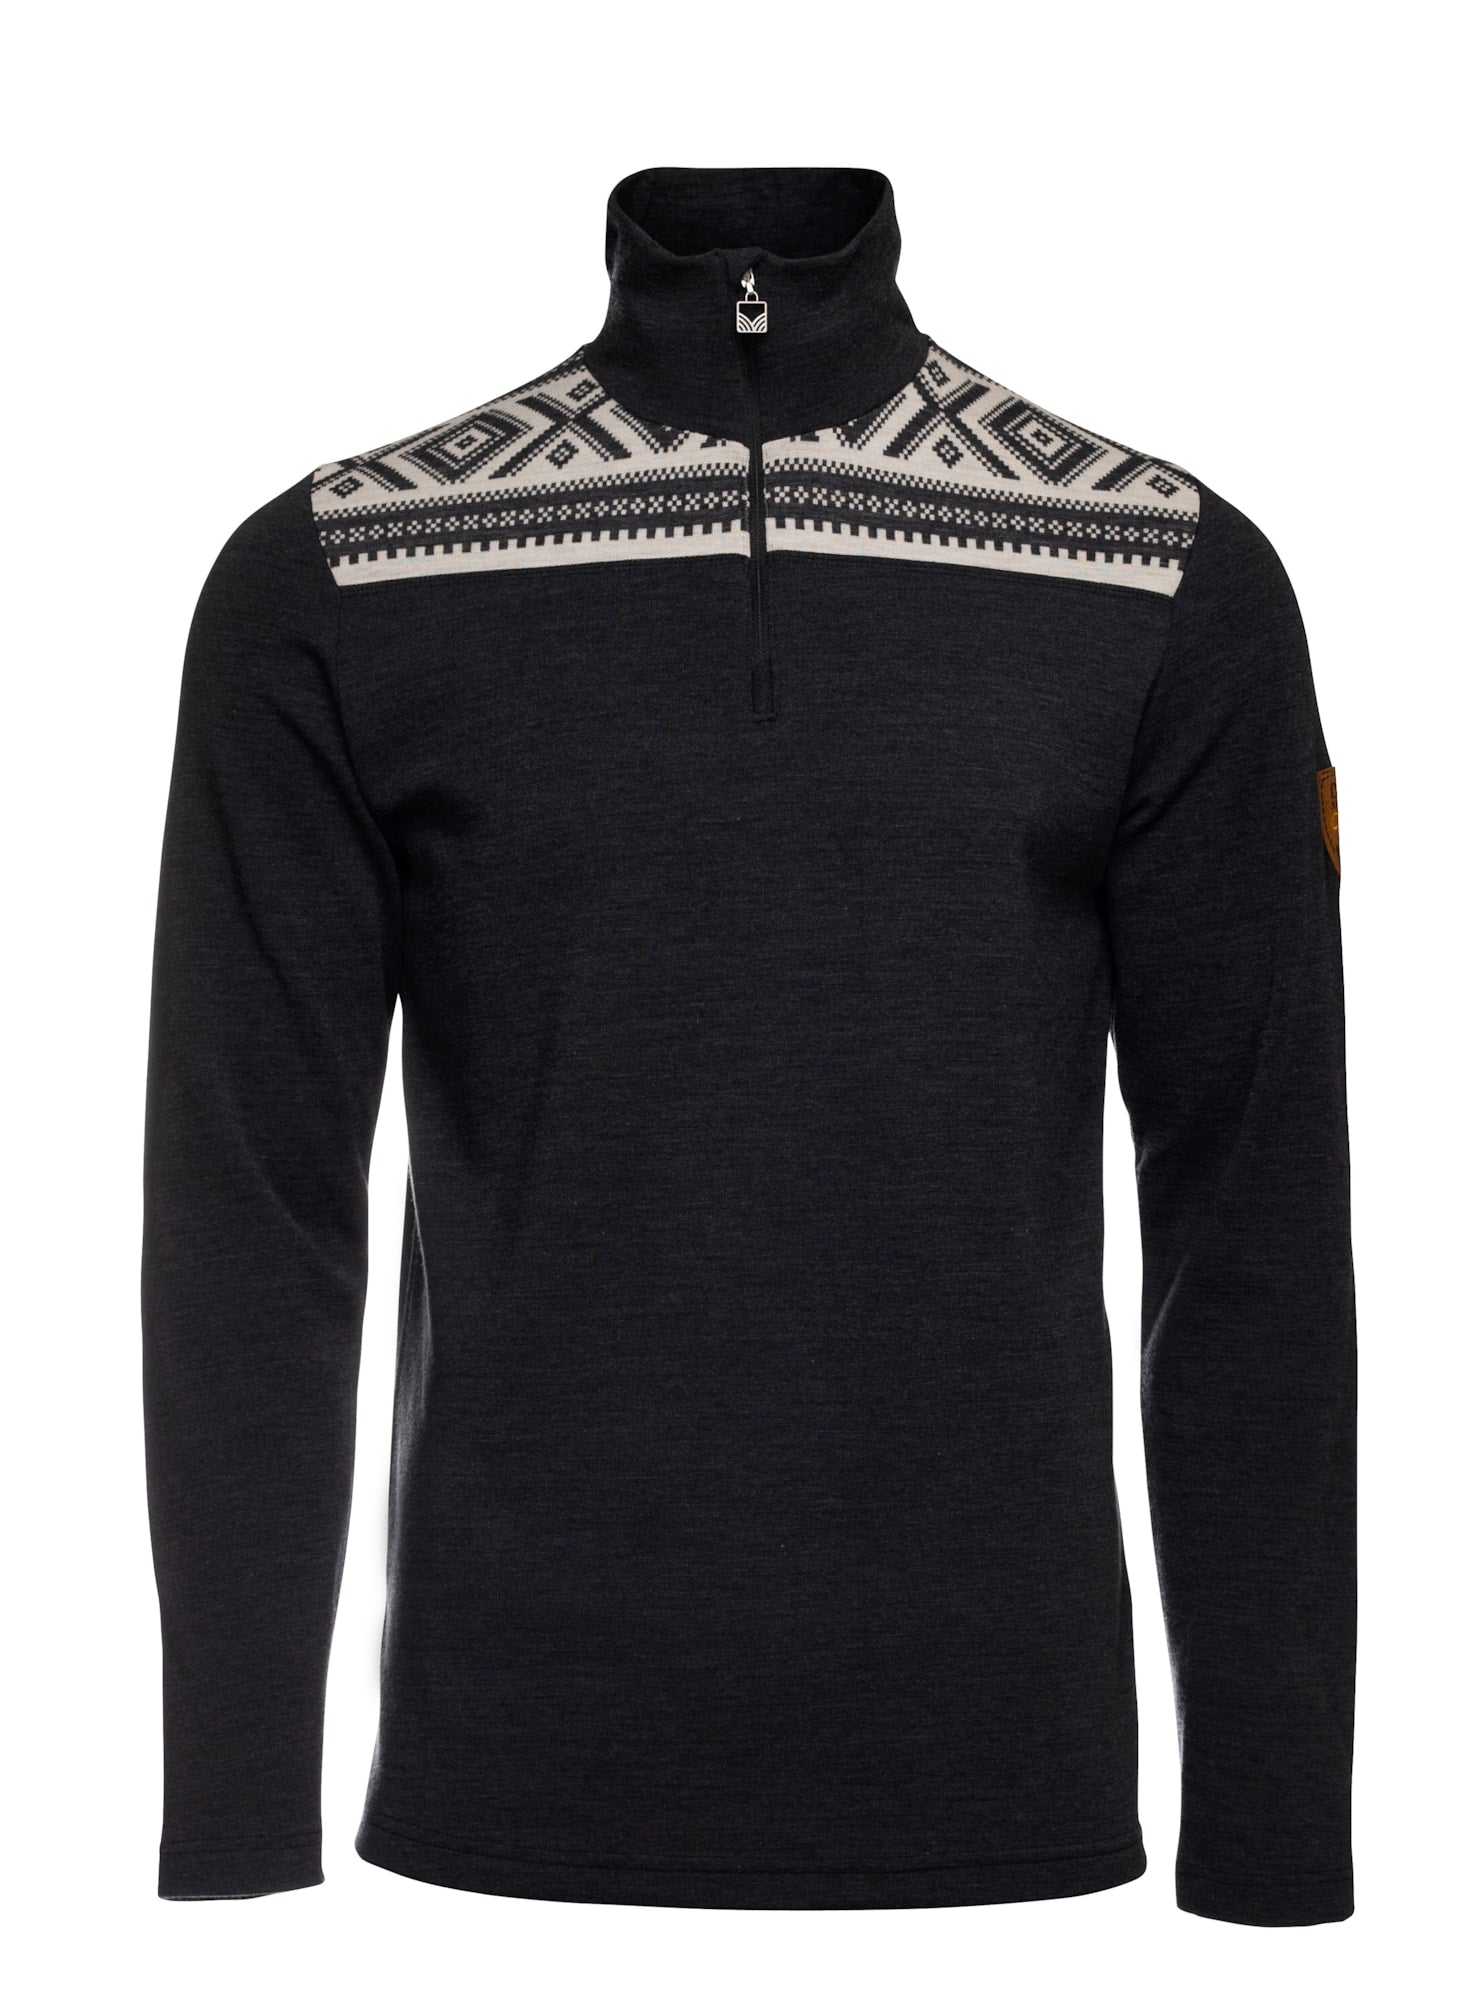 Dale of Norway Men's Cortina Basic Sweater